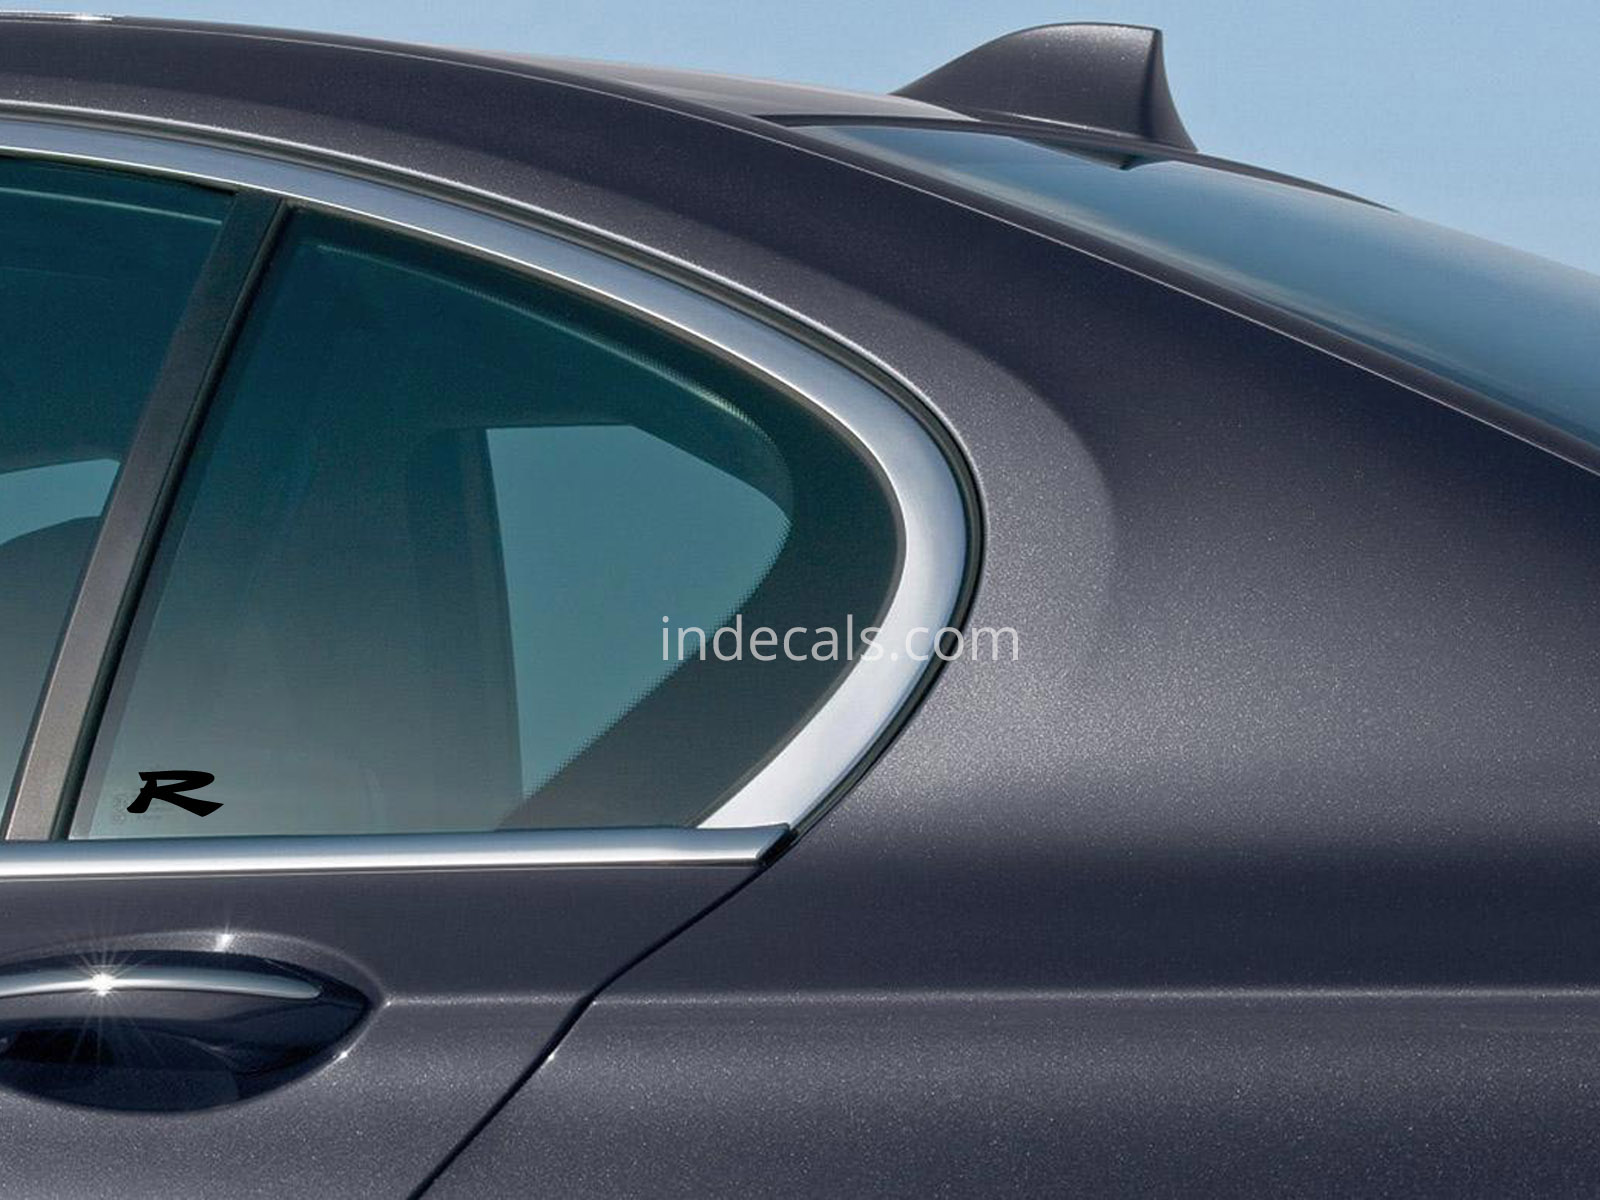 3 x Honda Type R Stickers for Rear Window - Black